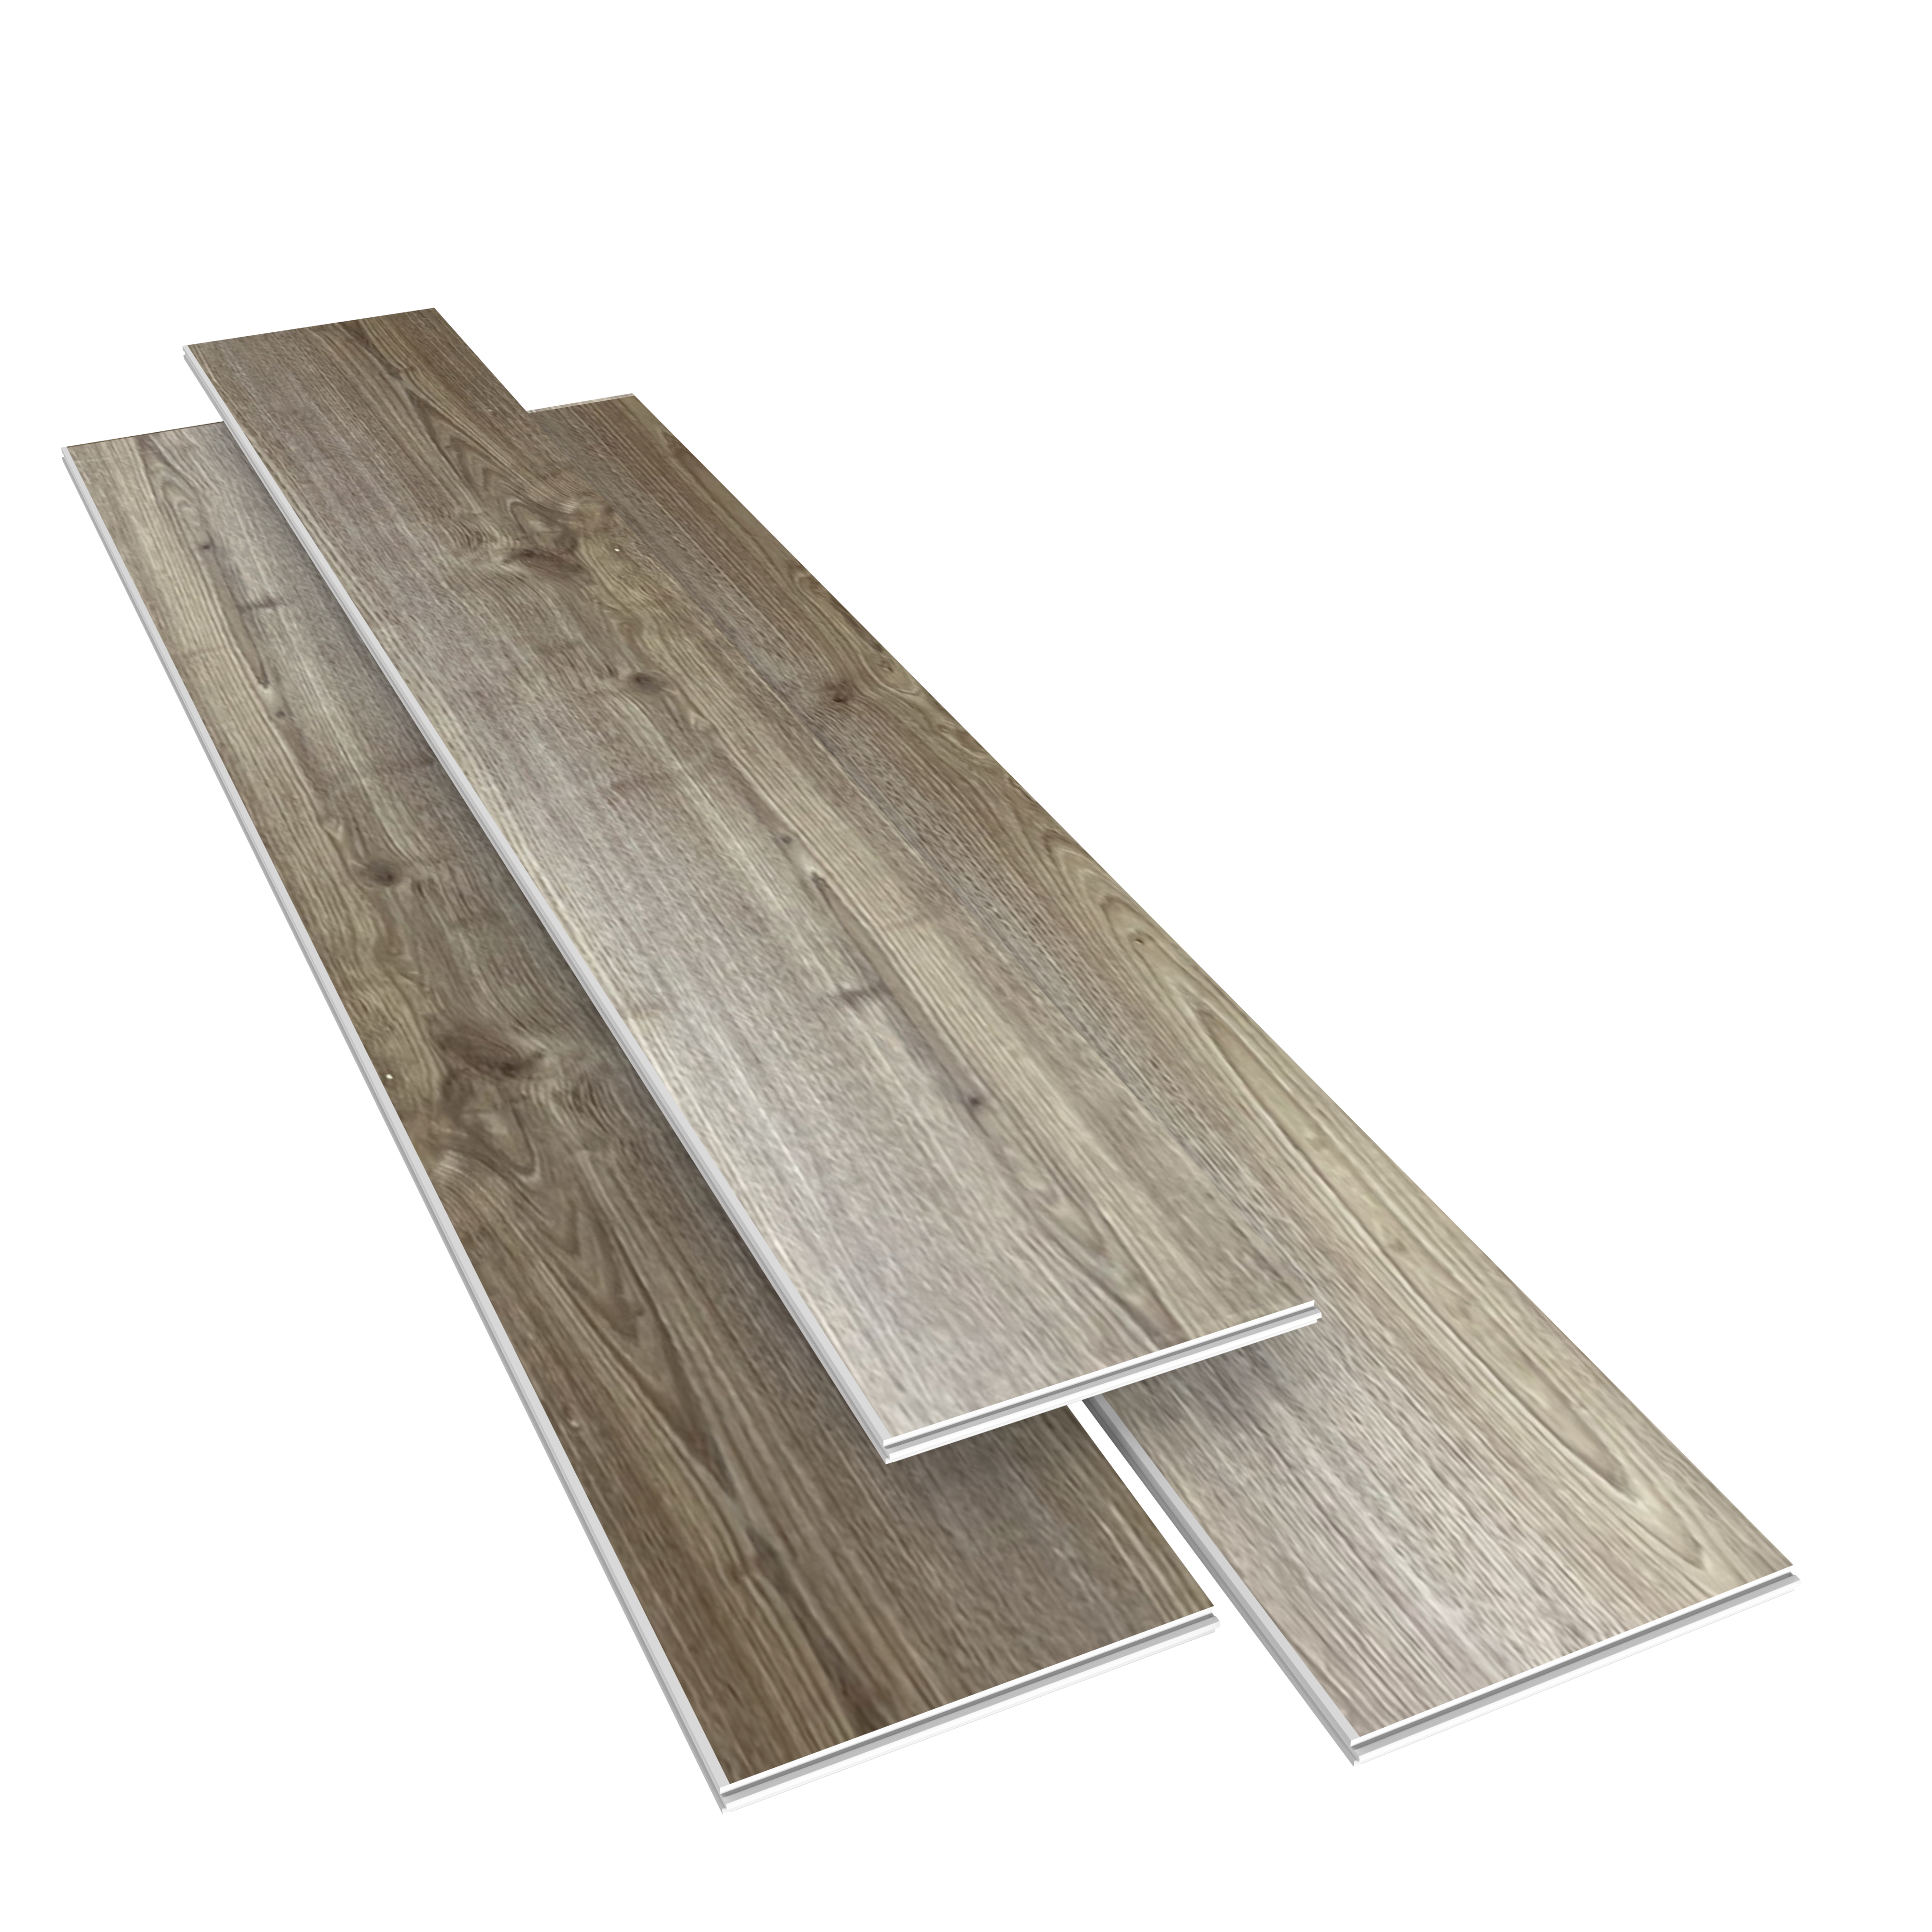 SPC Rigid Core Plank Fox & Hound Flooring, 9" x 60" x 6.5mm, 22 mil Wear Layer